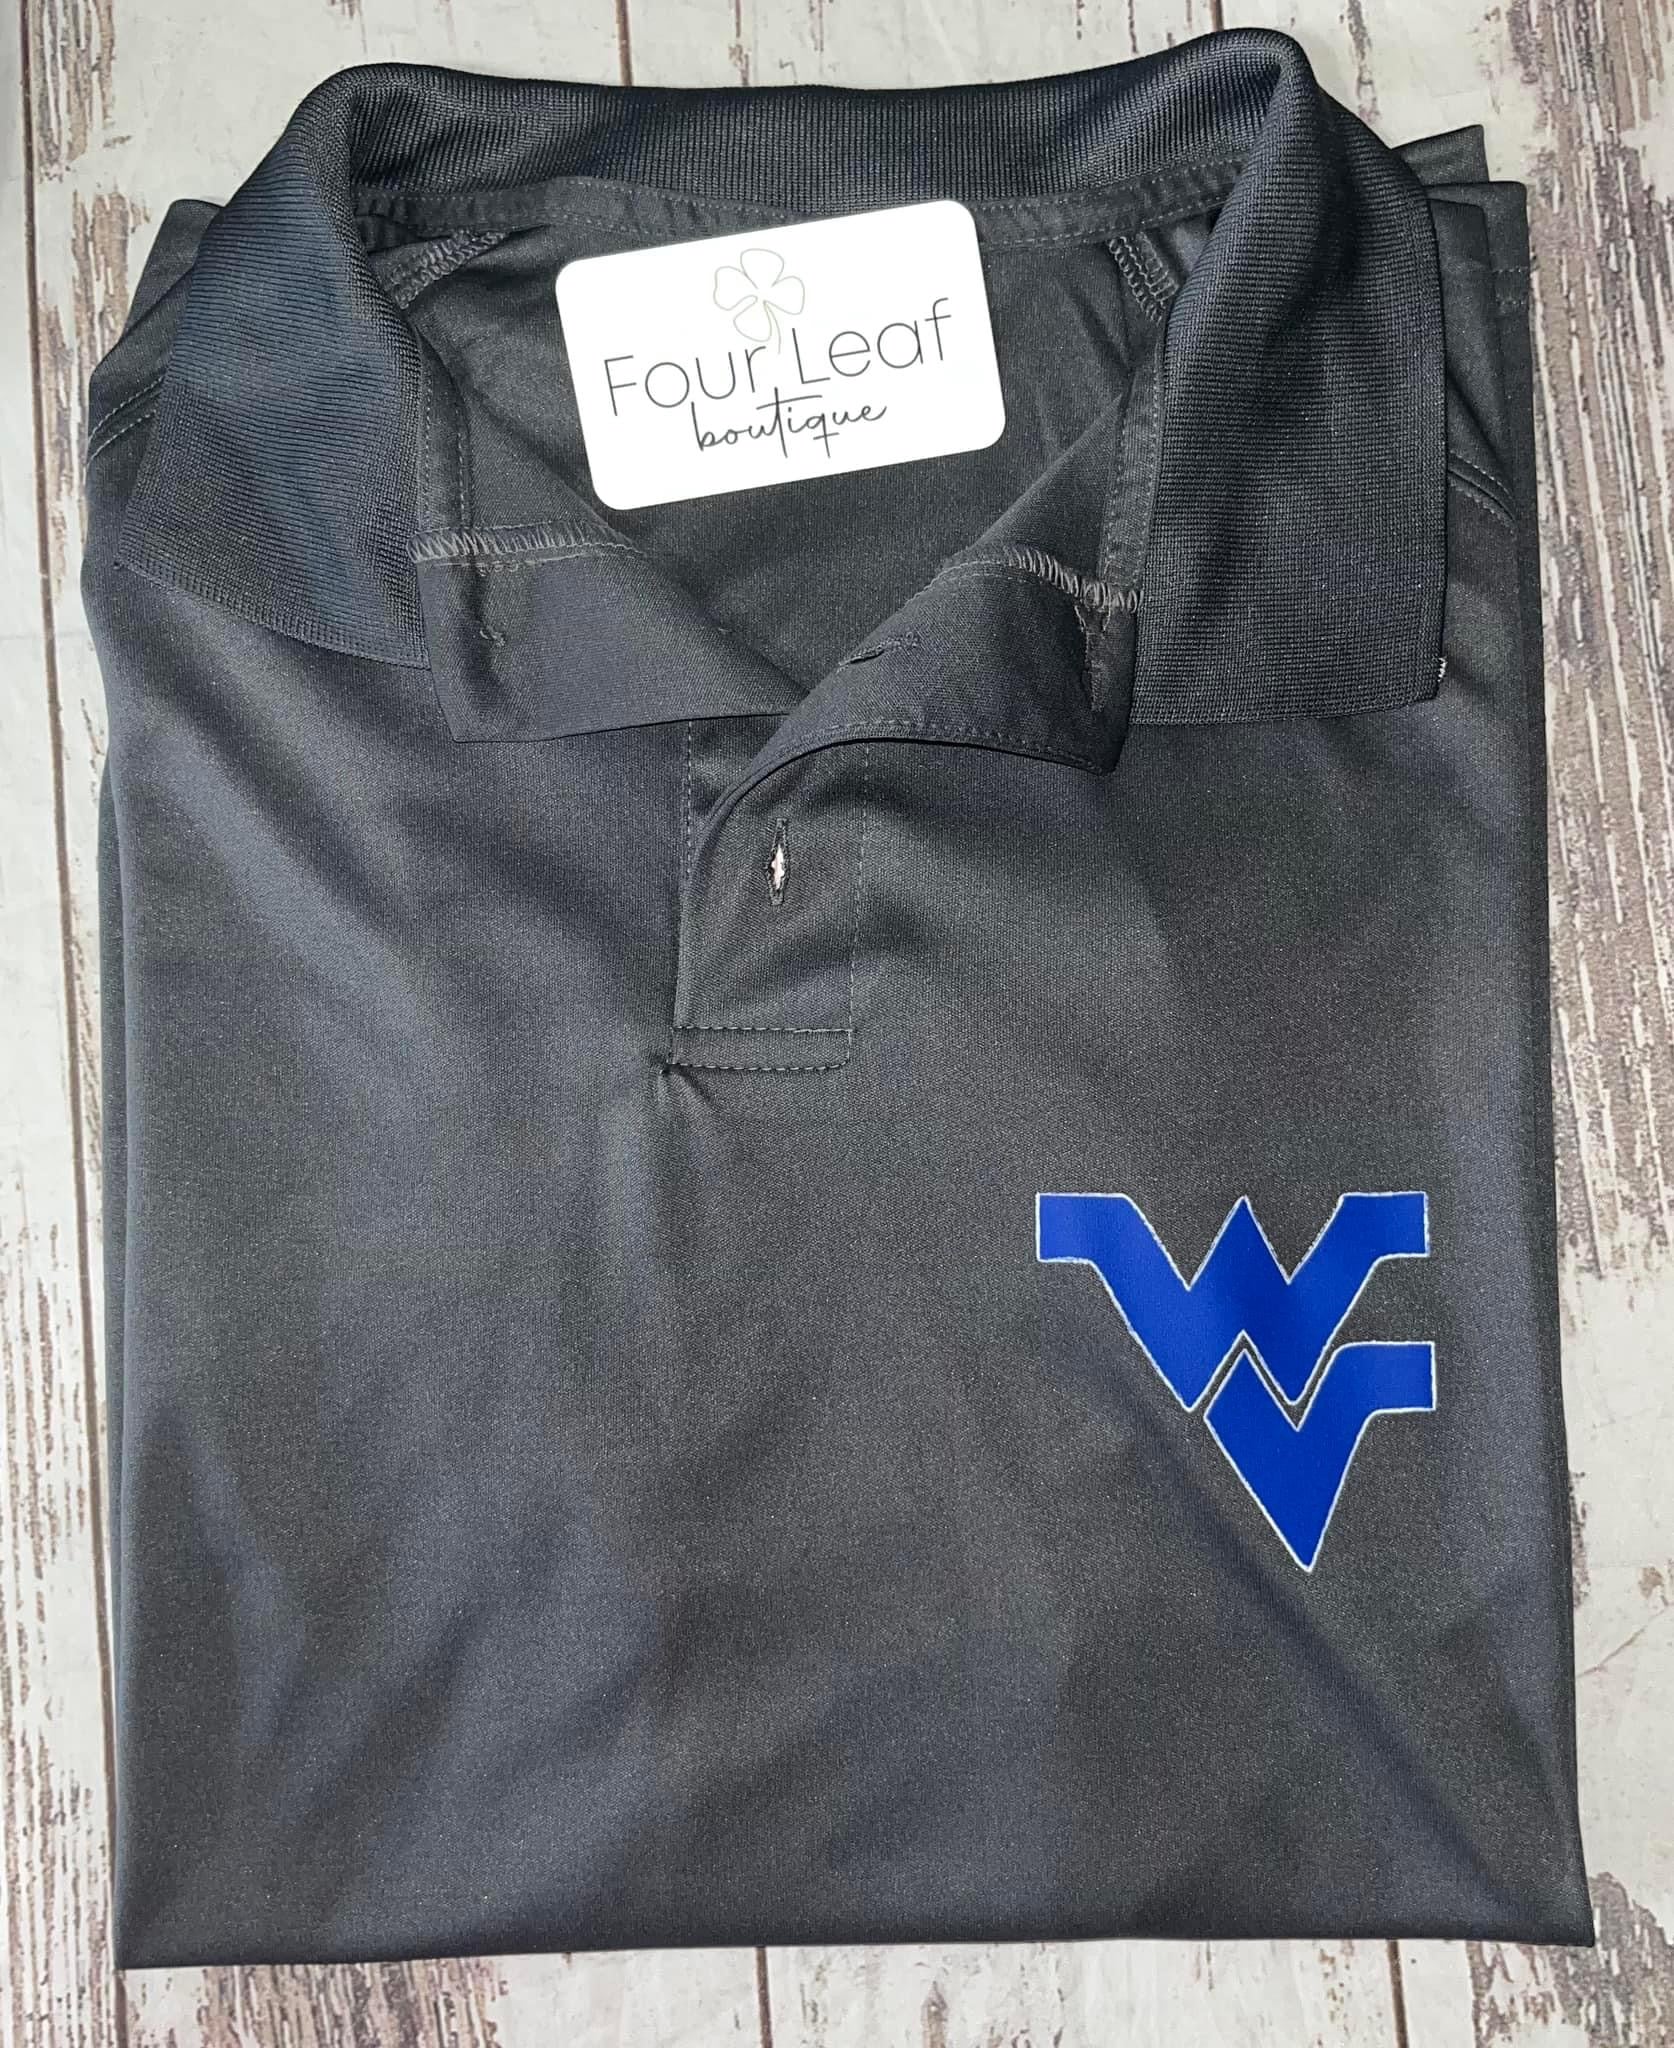 WV. Dri-fit Collar Shirt